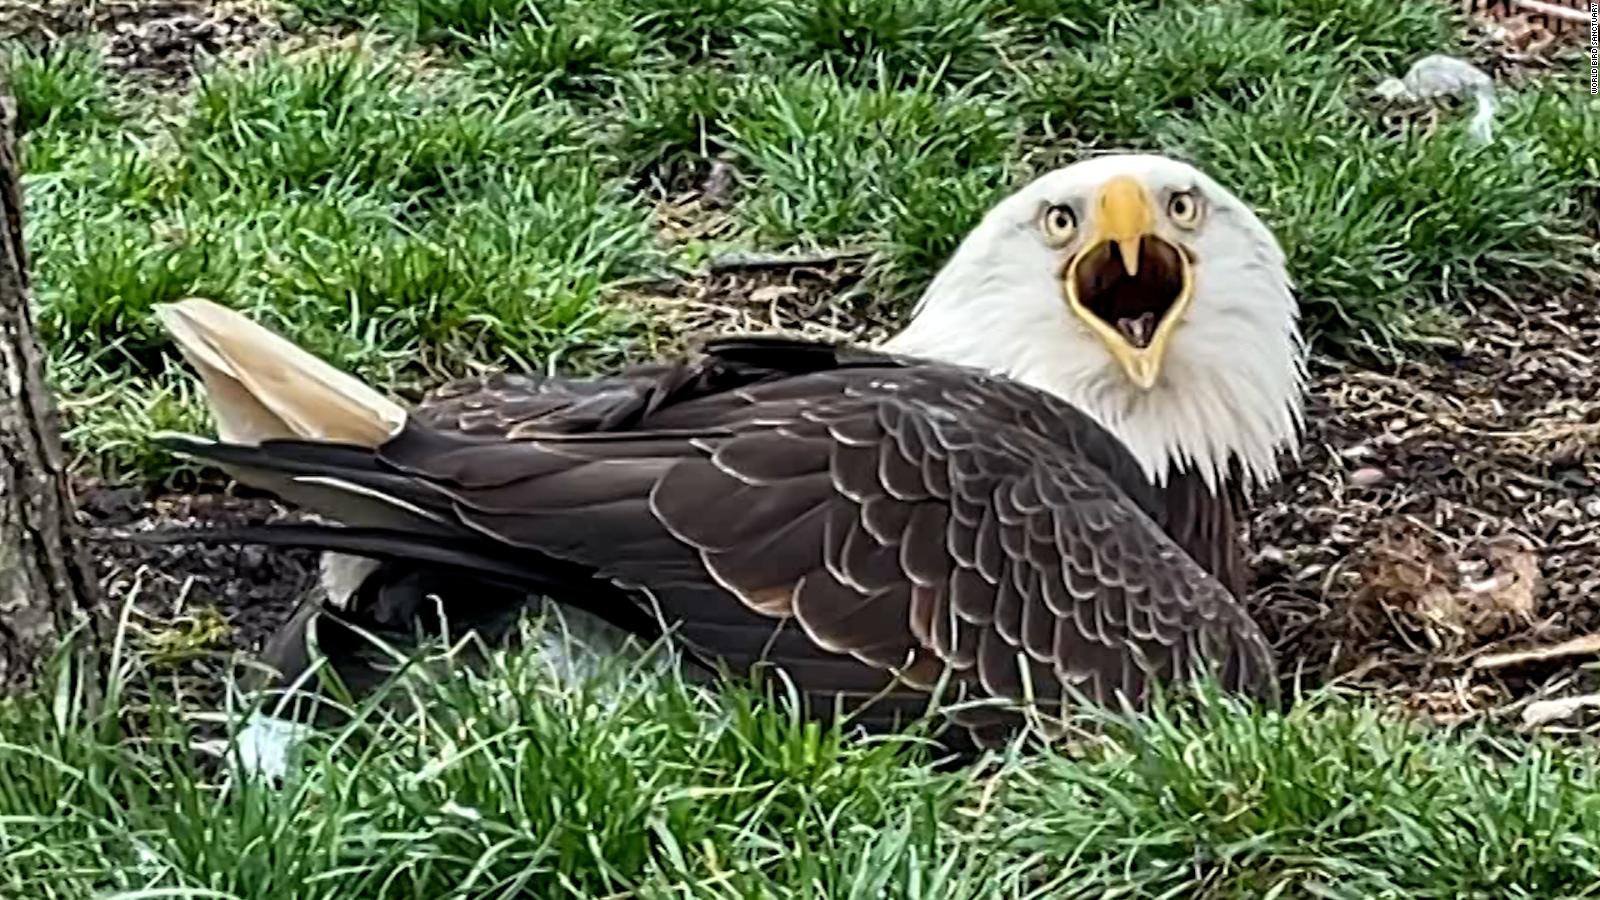 Águila incuba una roca en lugar de un huevo | Video